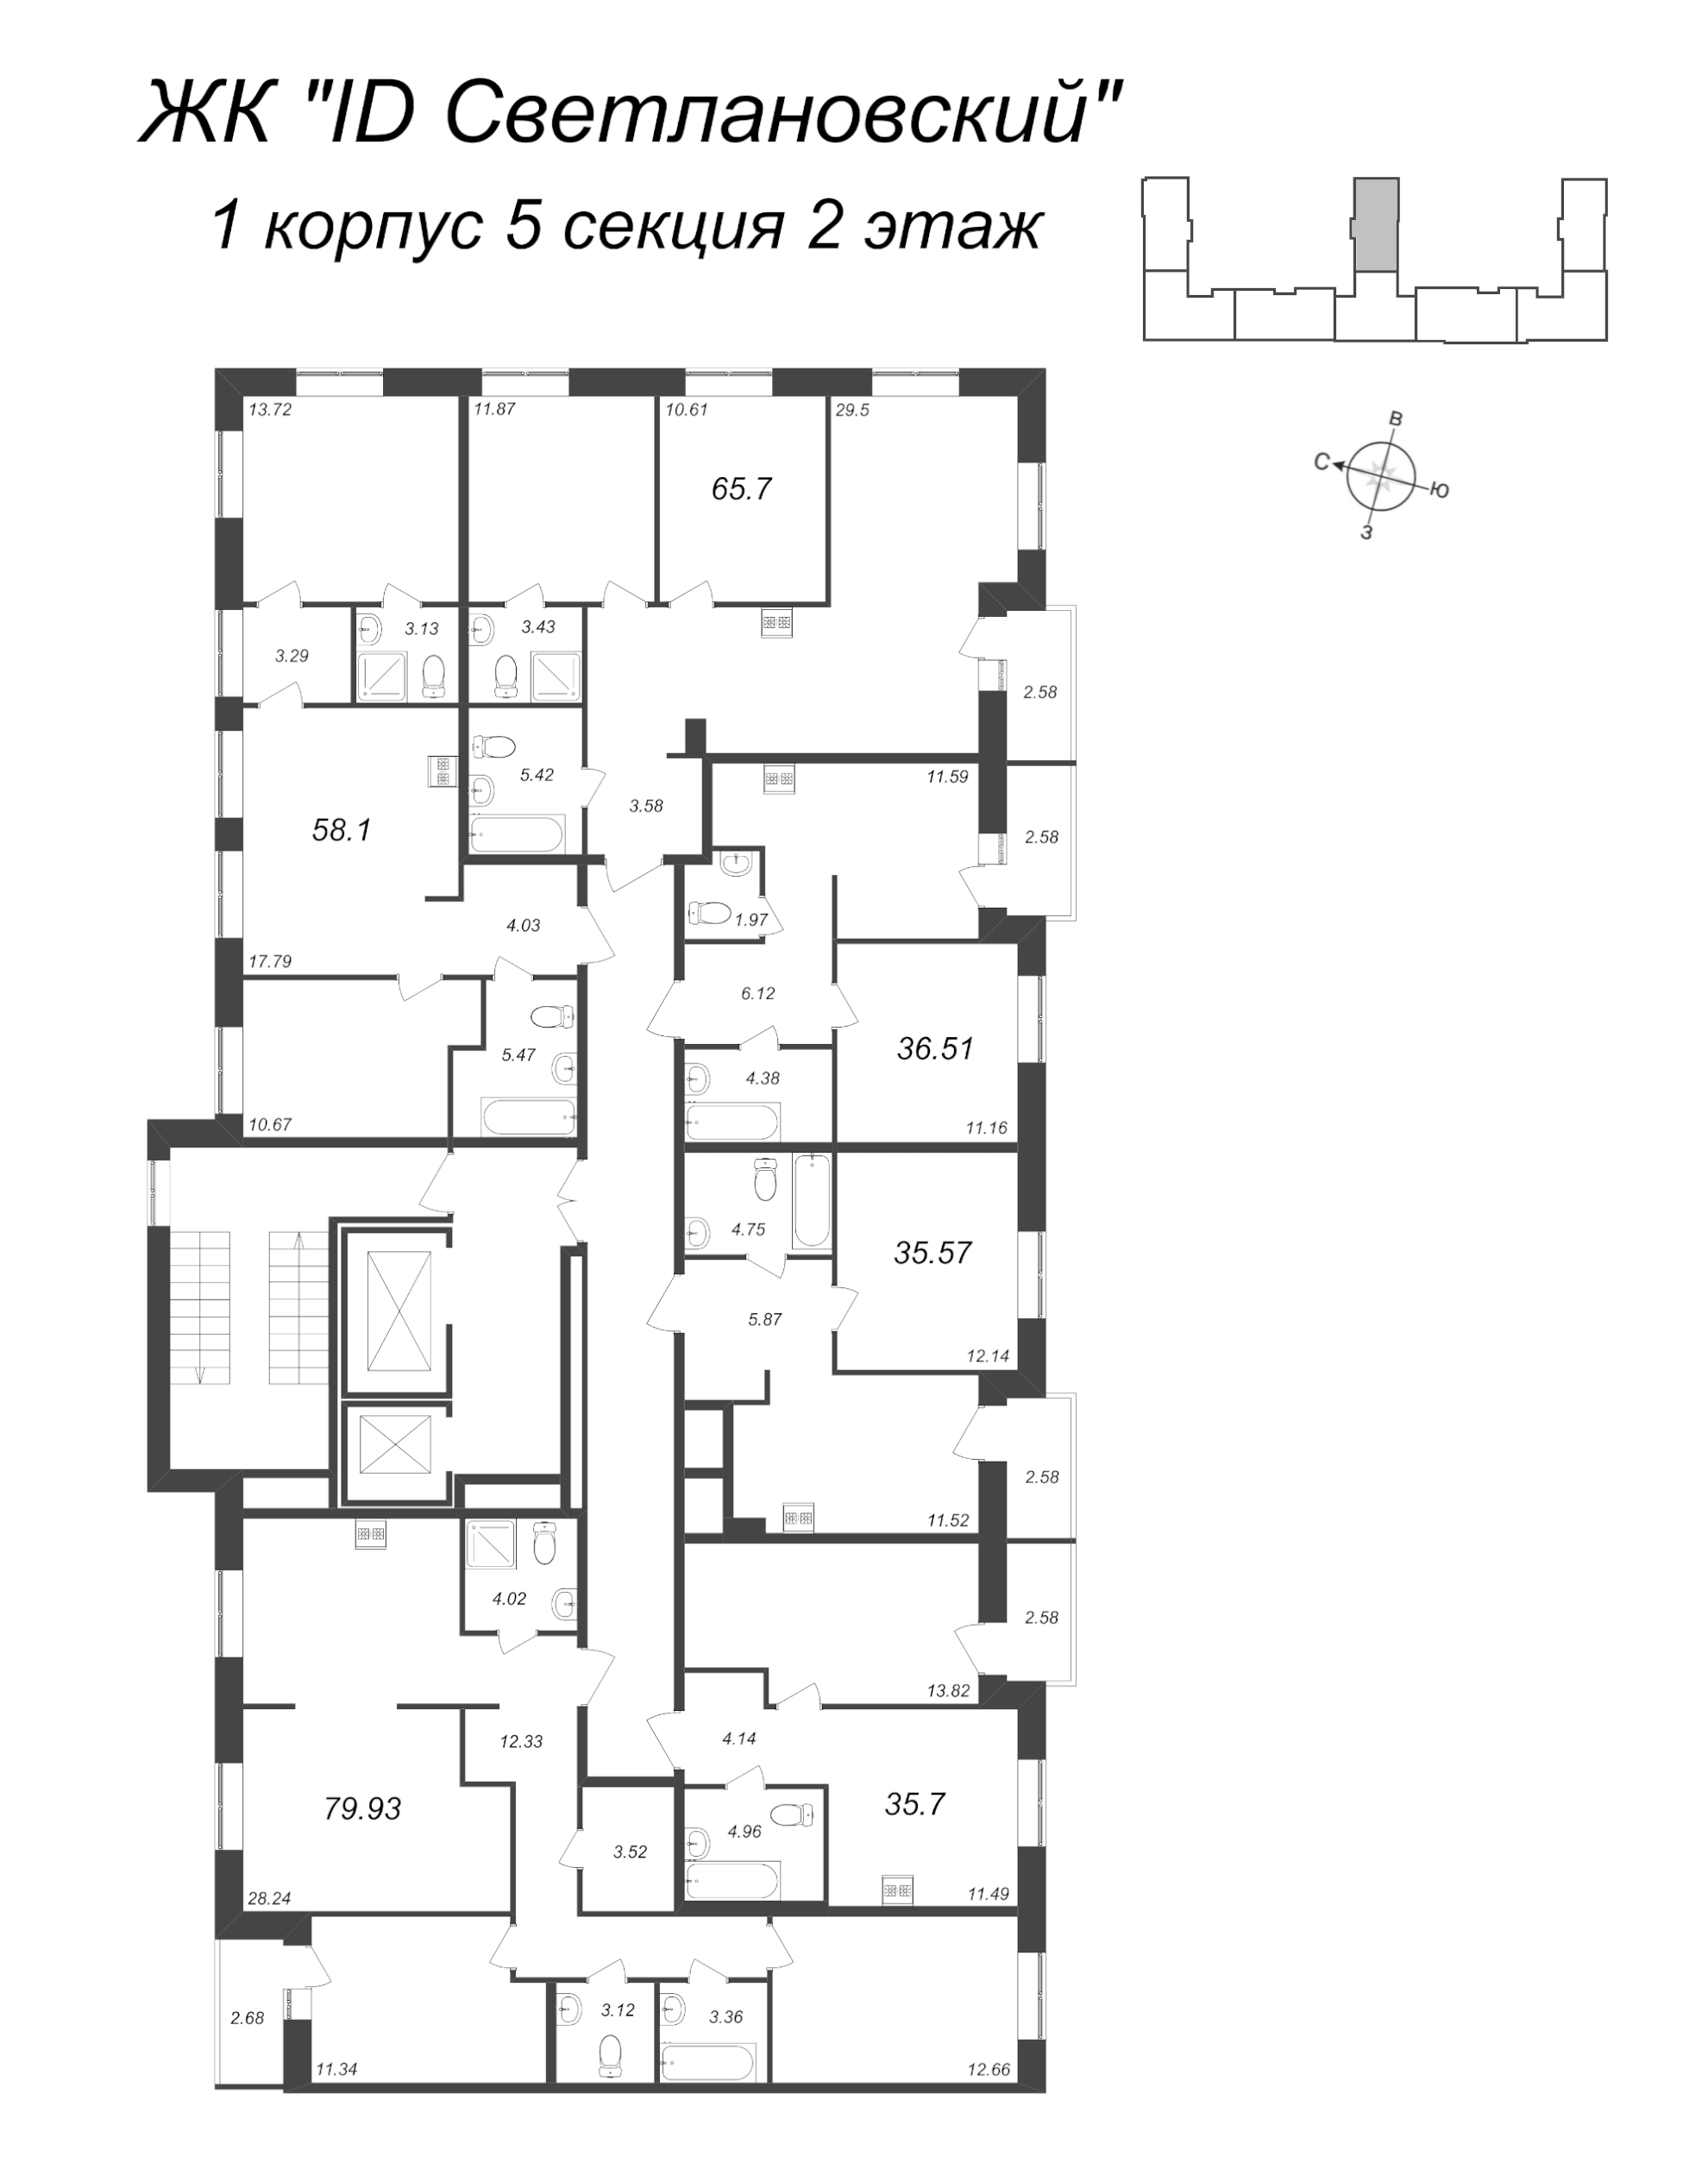 3-комнатная (Евро) квартира, 79.93 м² - планировка этажа